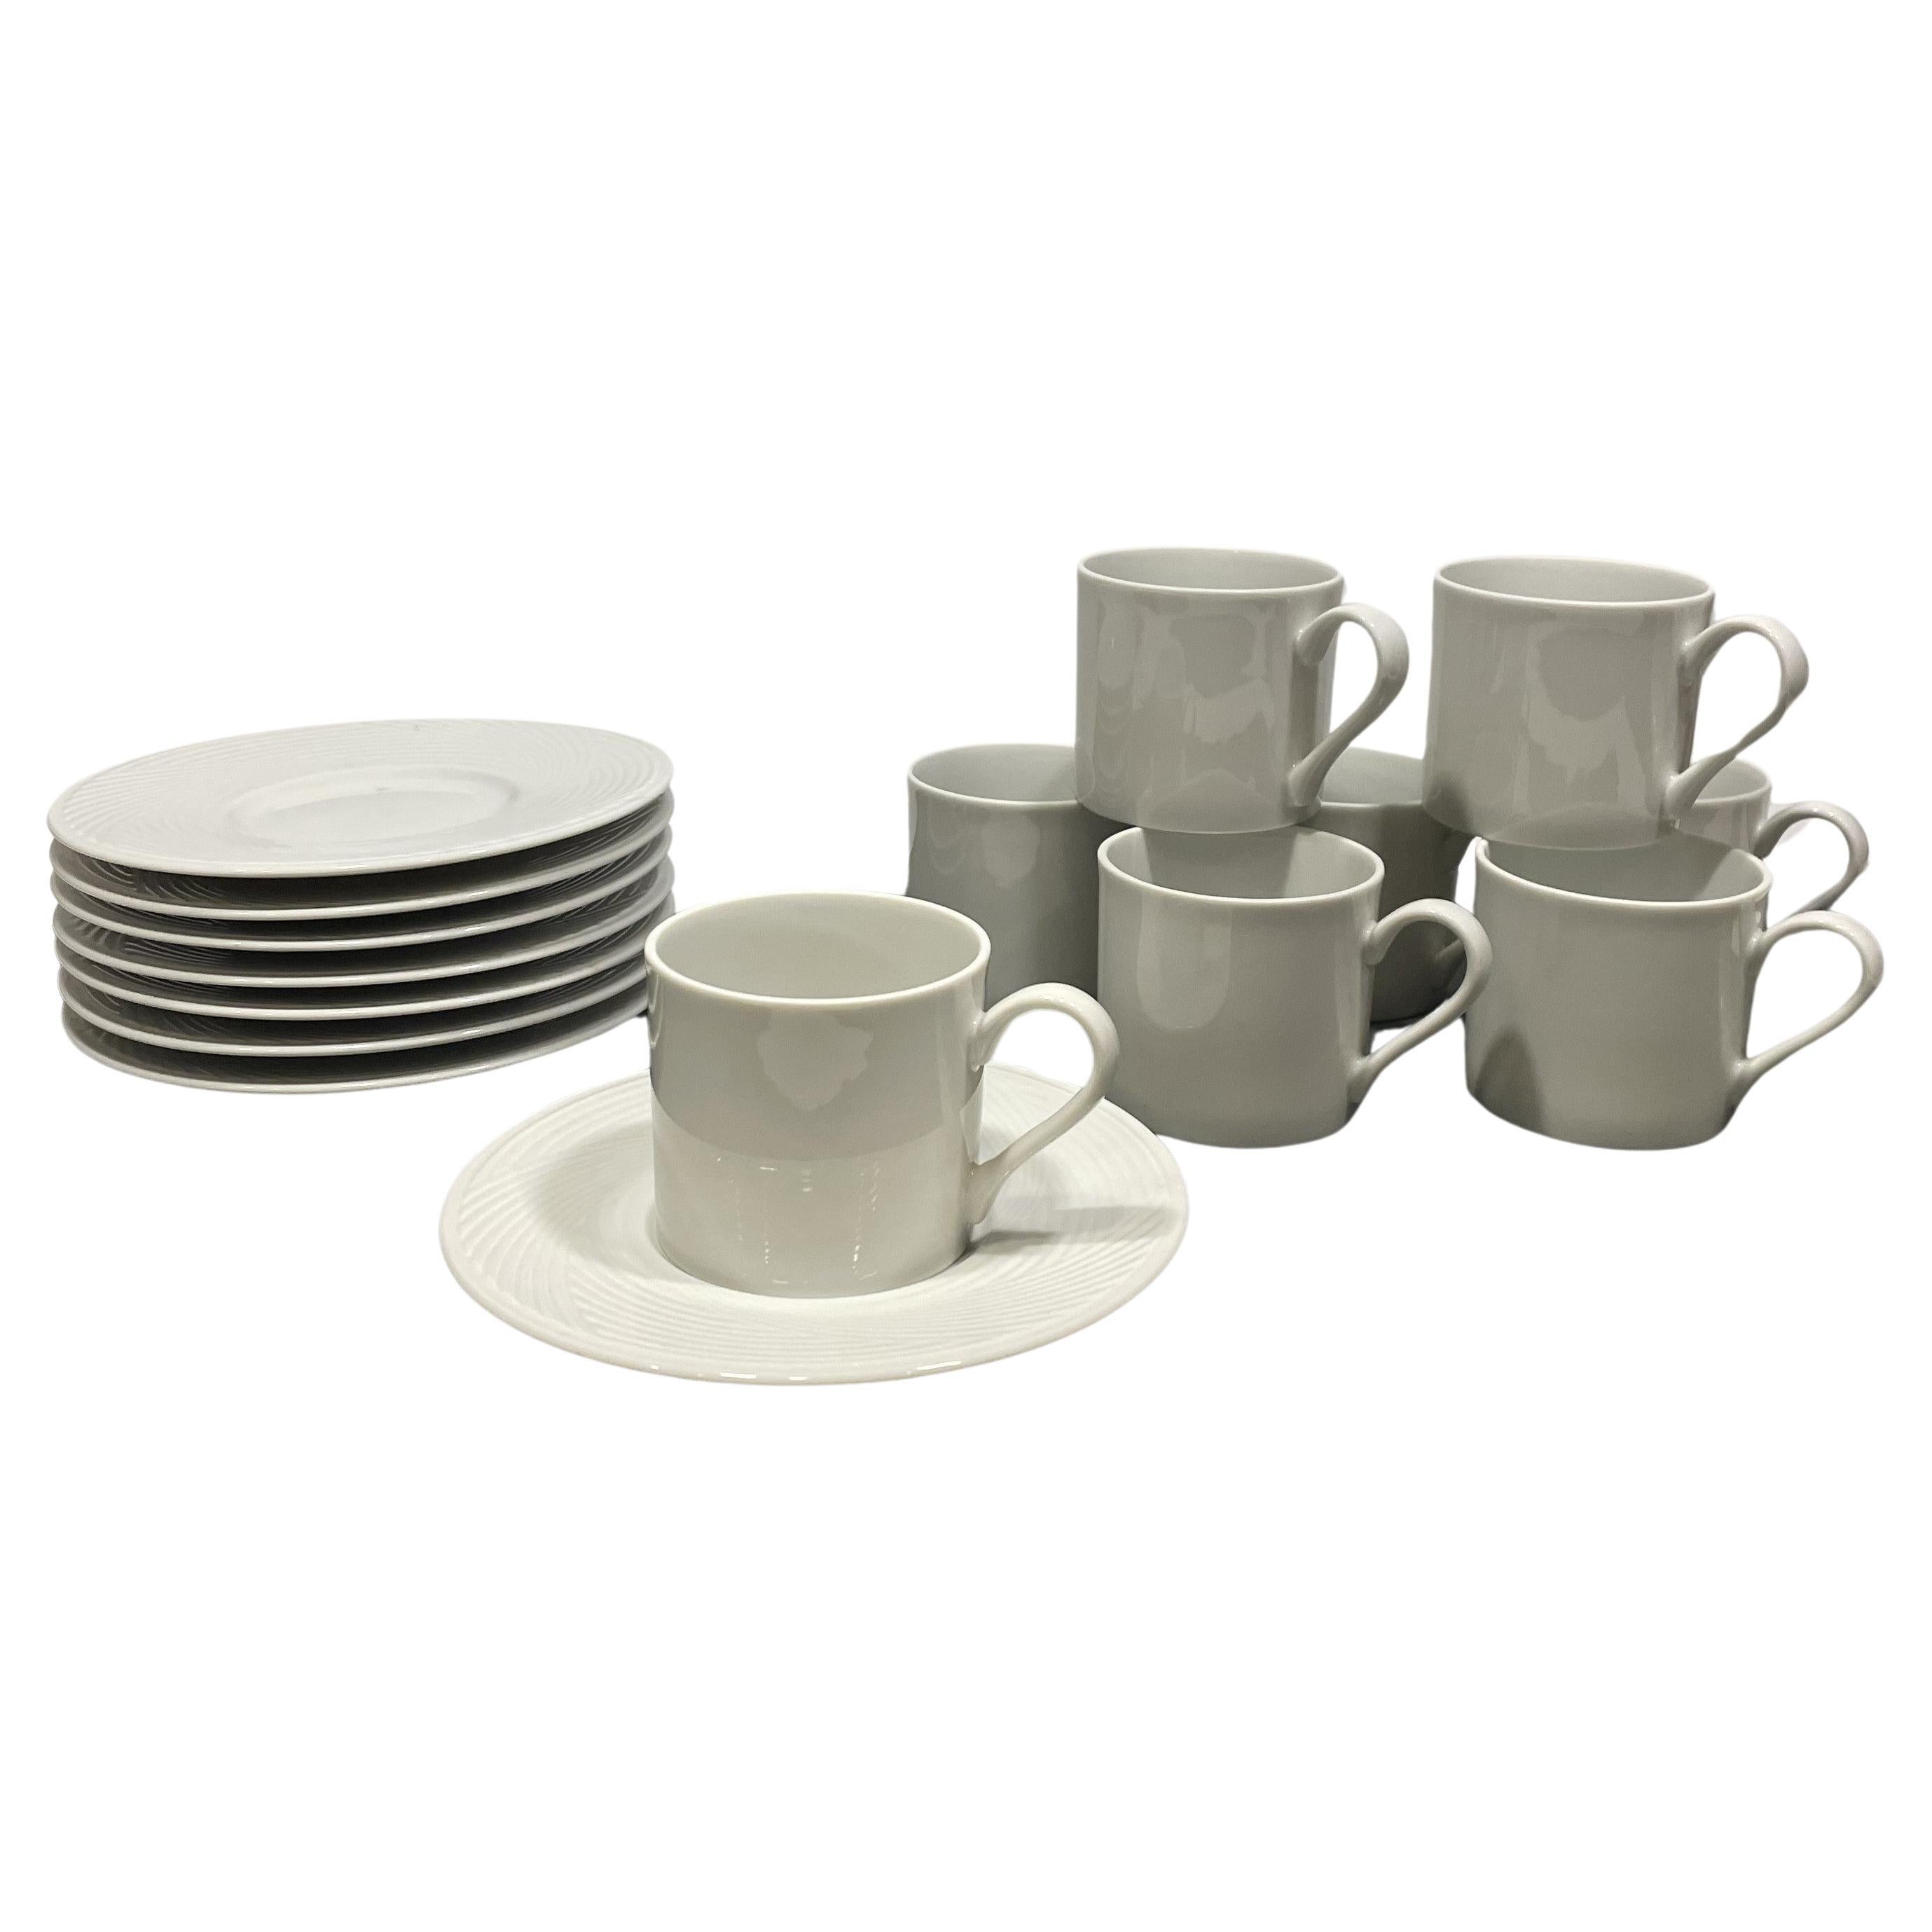 1960s White Porcelain Dansk Demitasse Cups and Saucers - Set of 8 For Sale